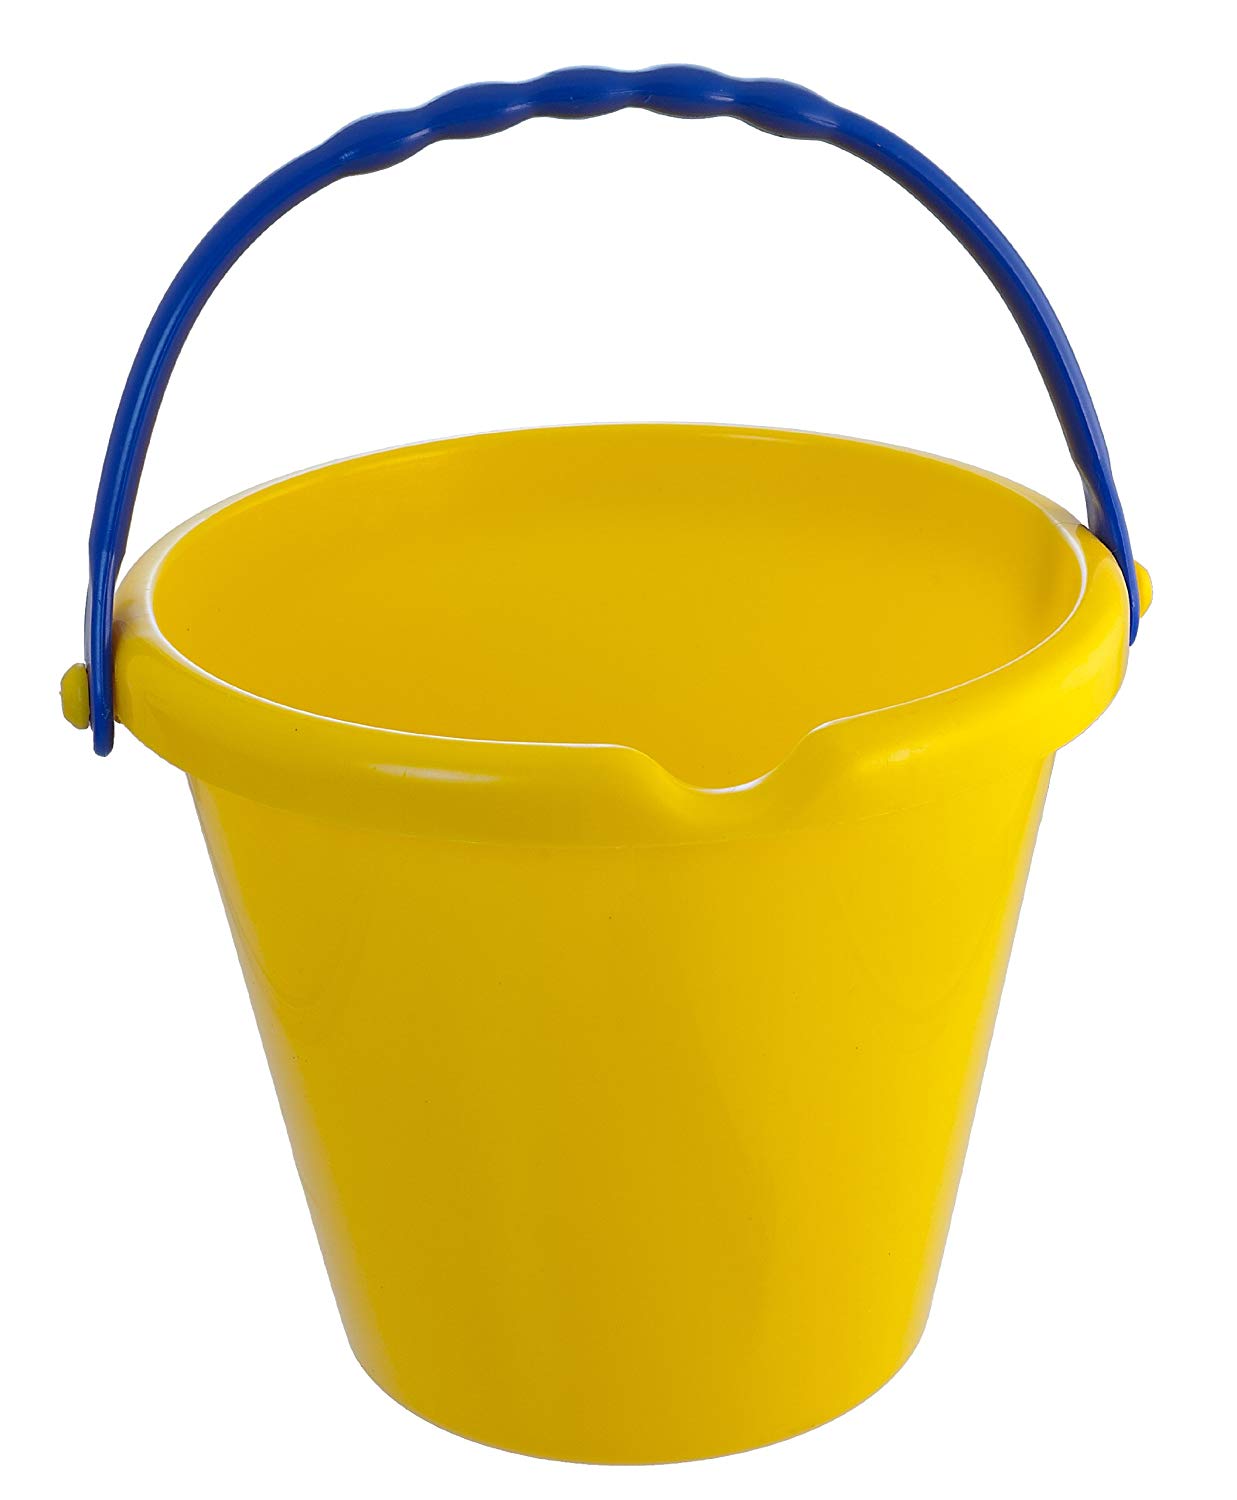 bucket clipart yellow bucket